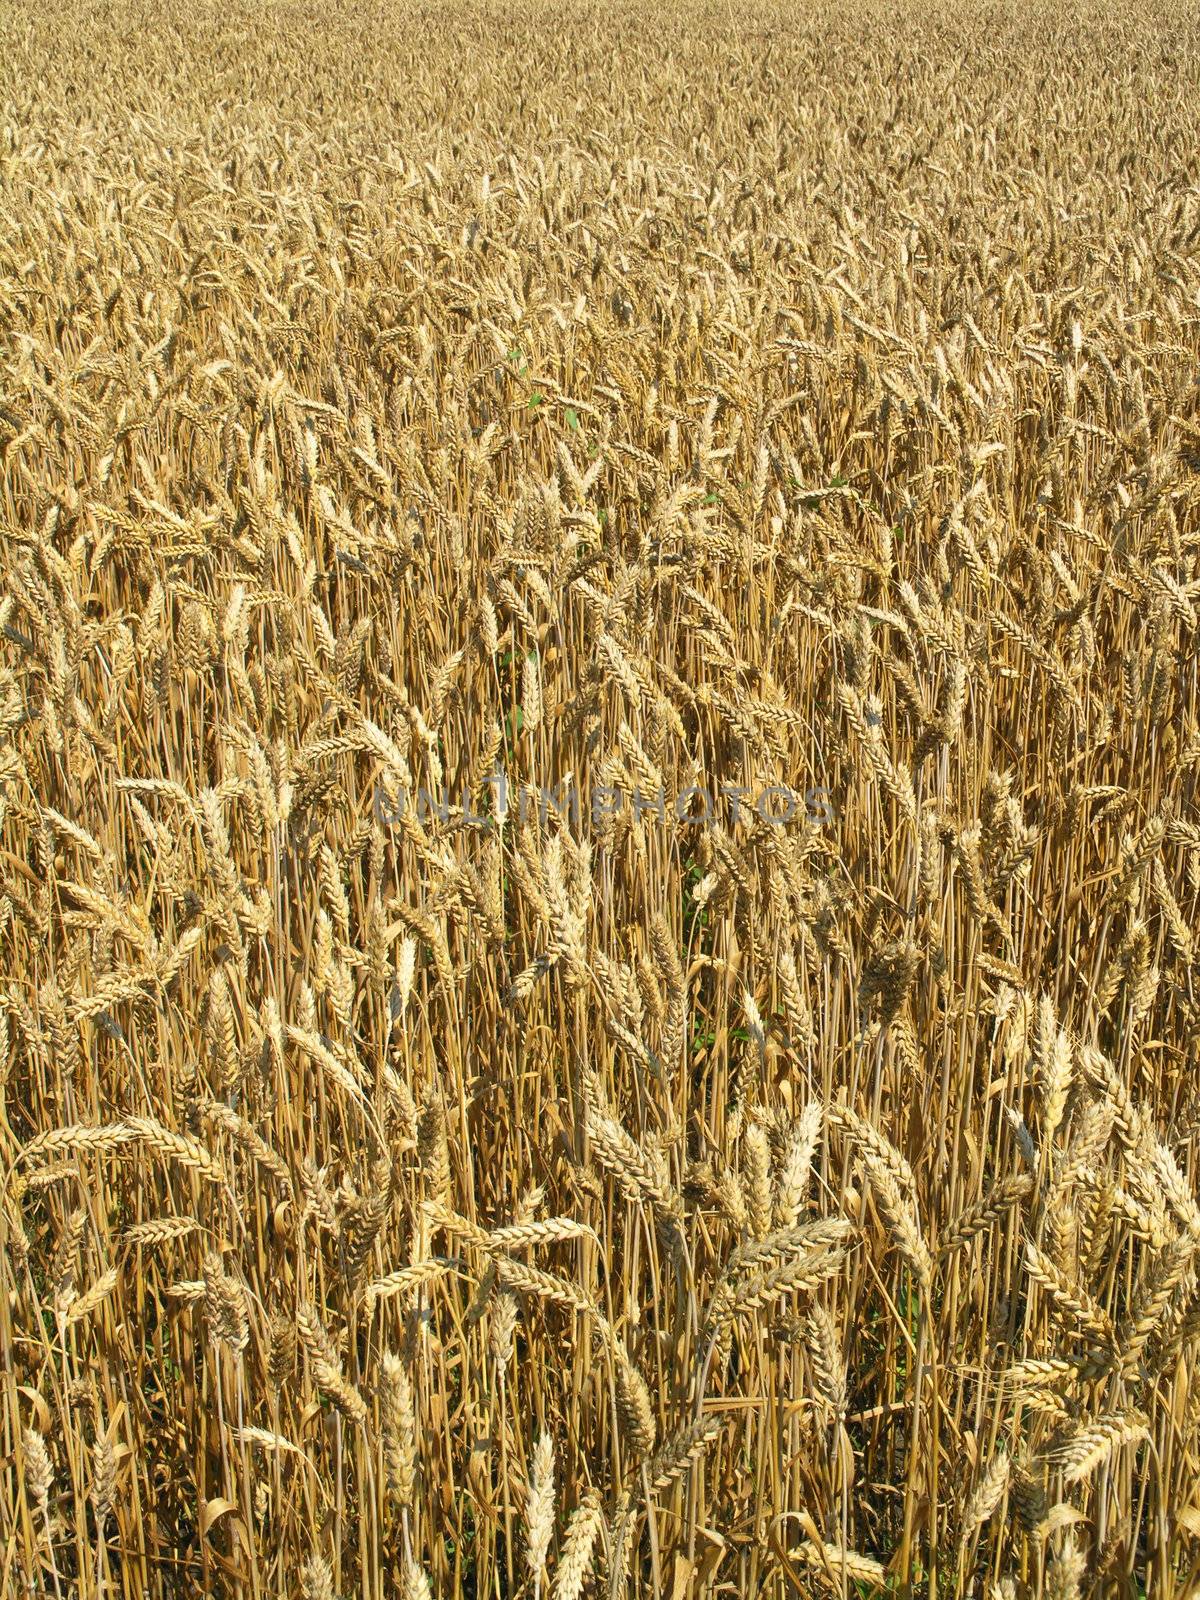 Harvest Field by adamr